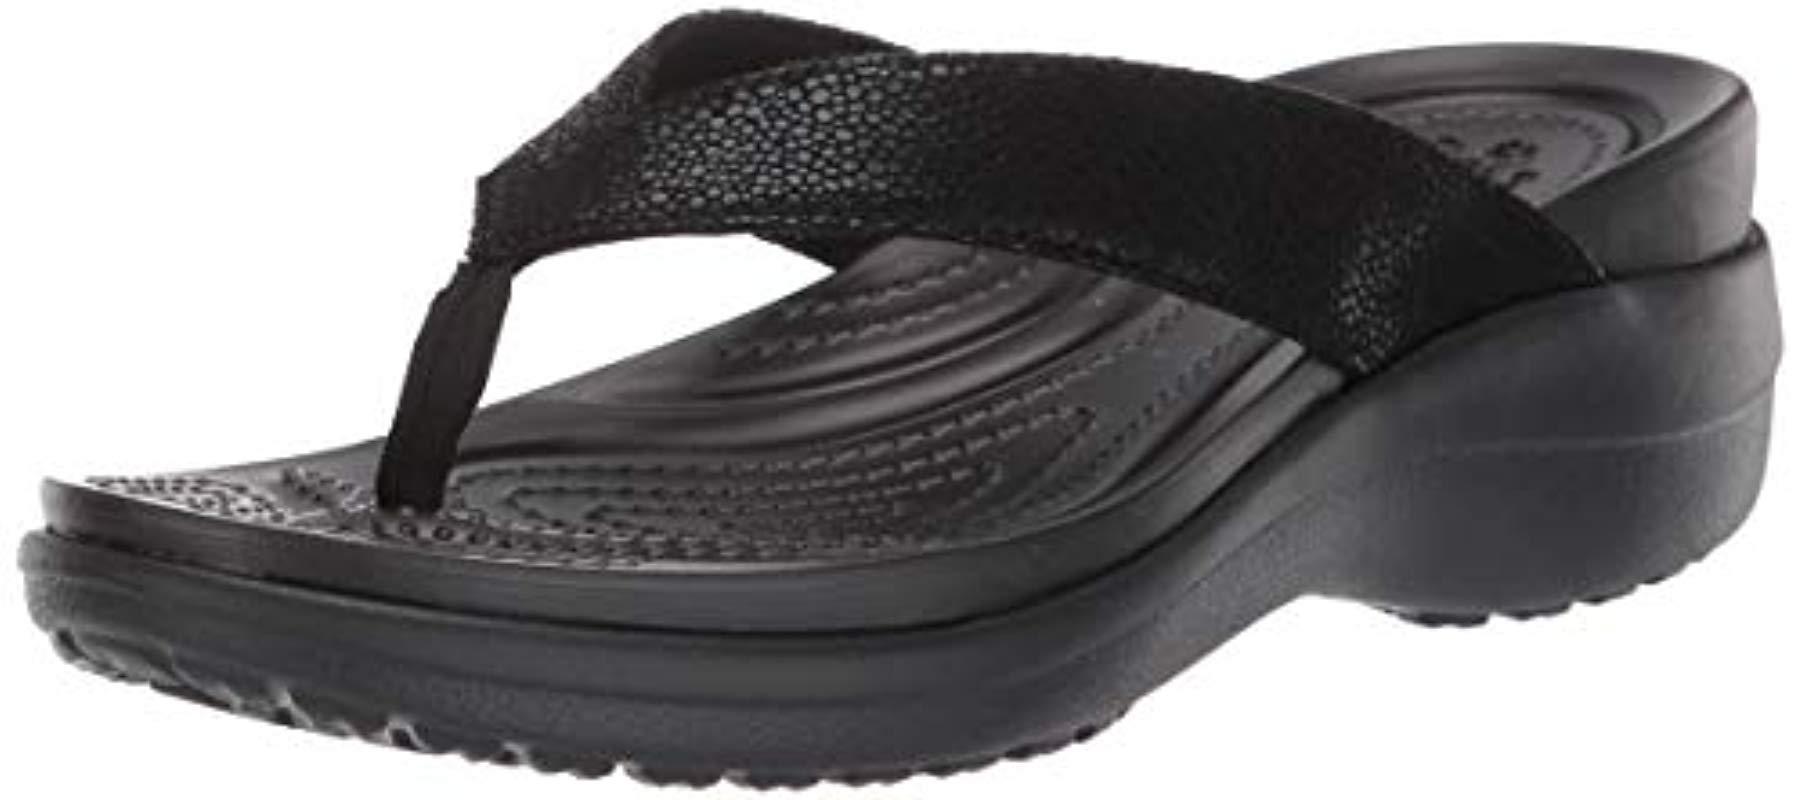 Crocs™ Reviva Flip Flop in Black - Lyst